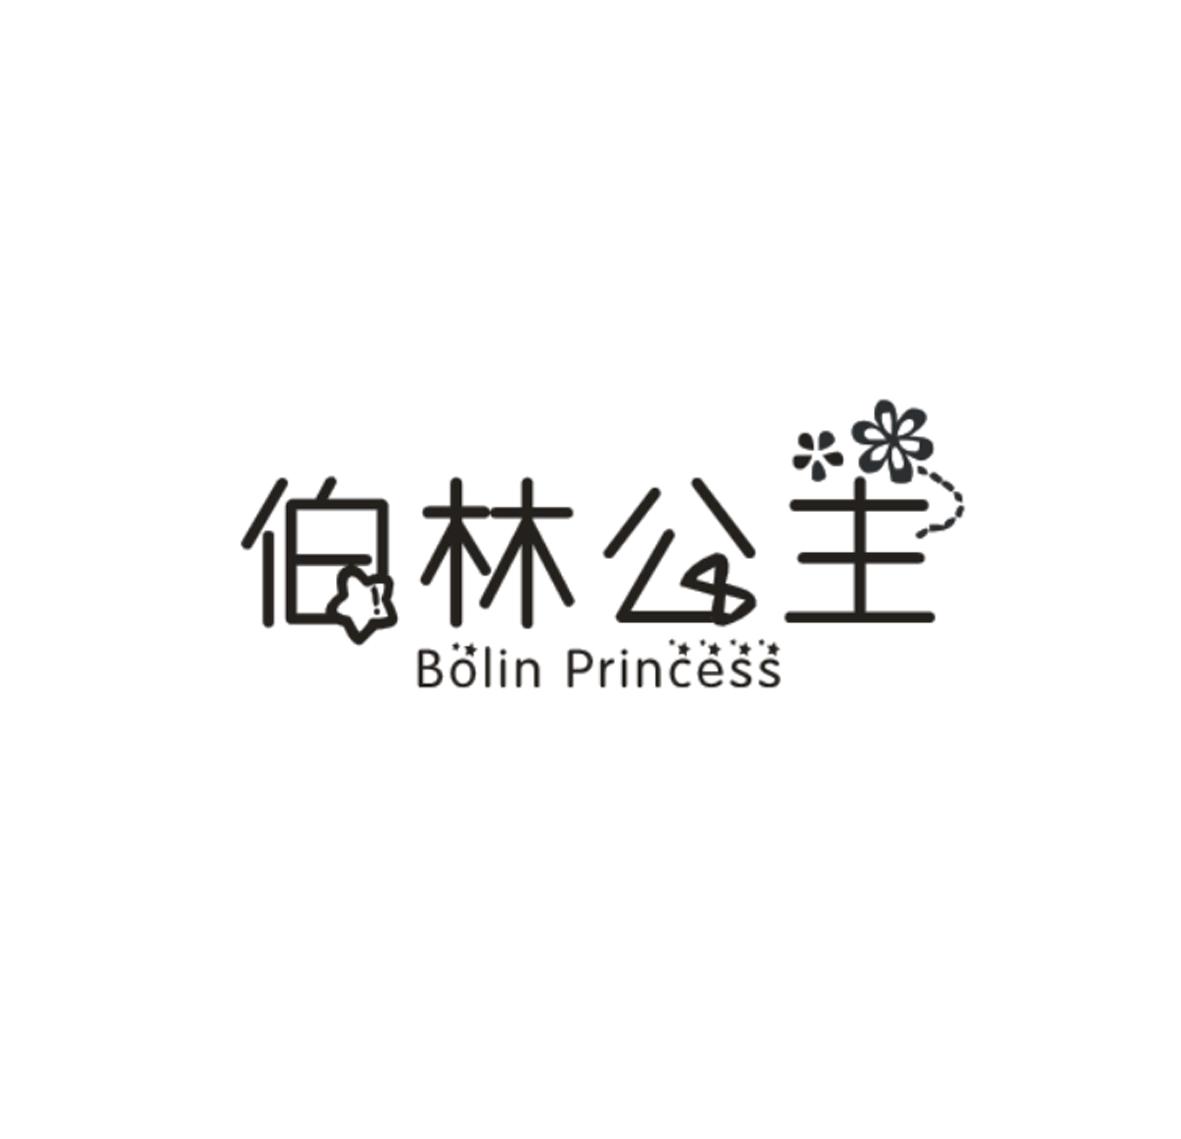 伯林公主 BOLIN PRINCESS